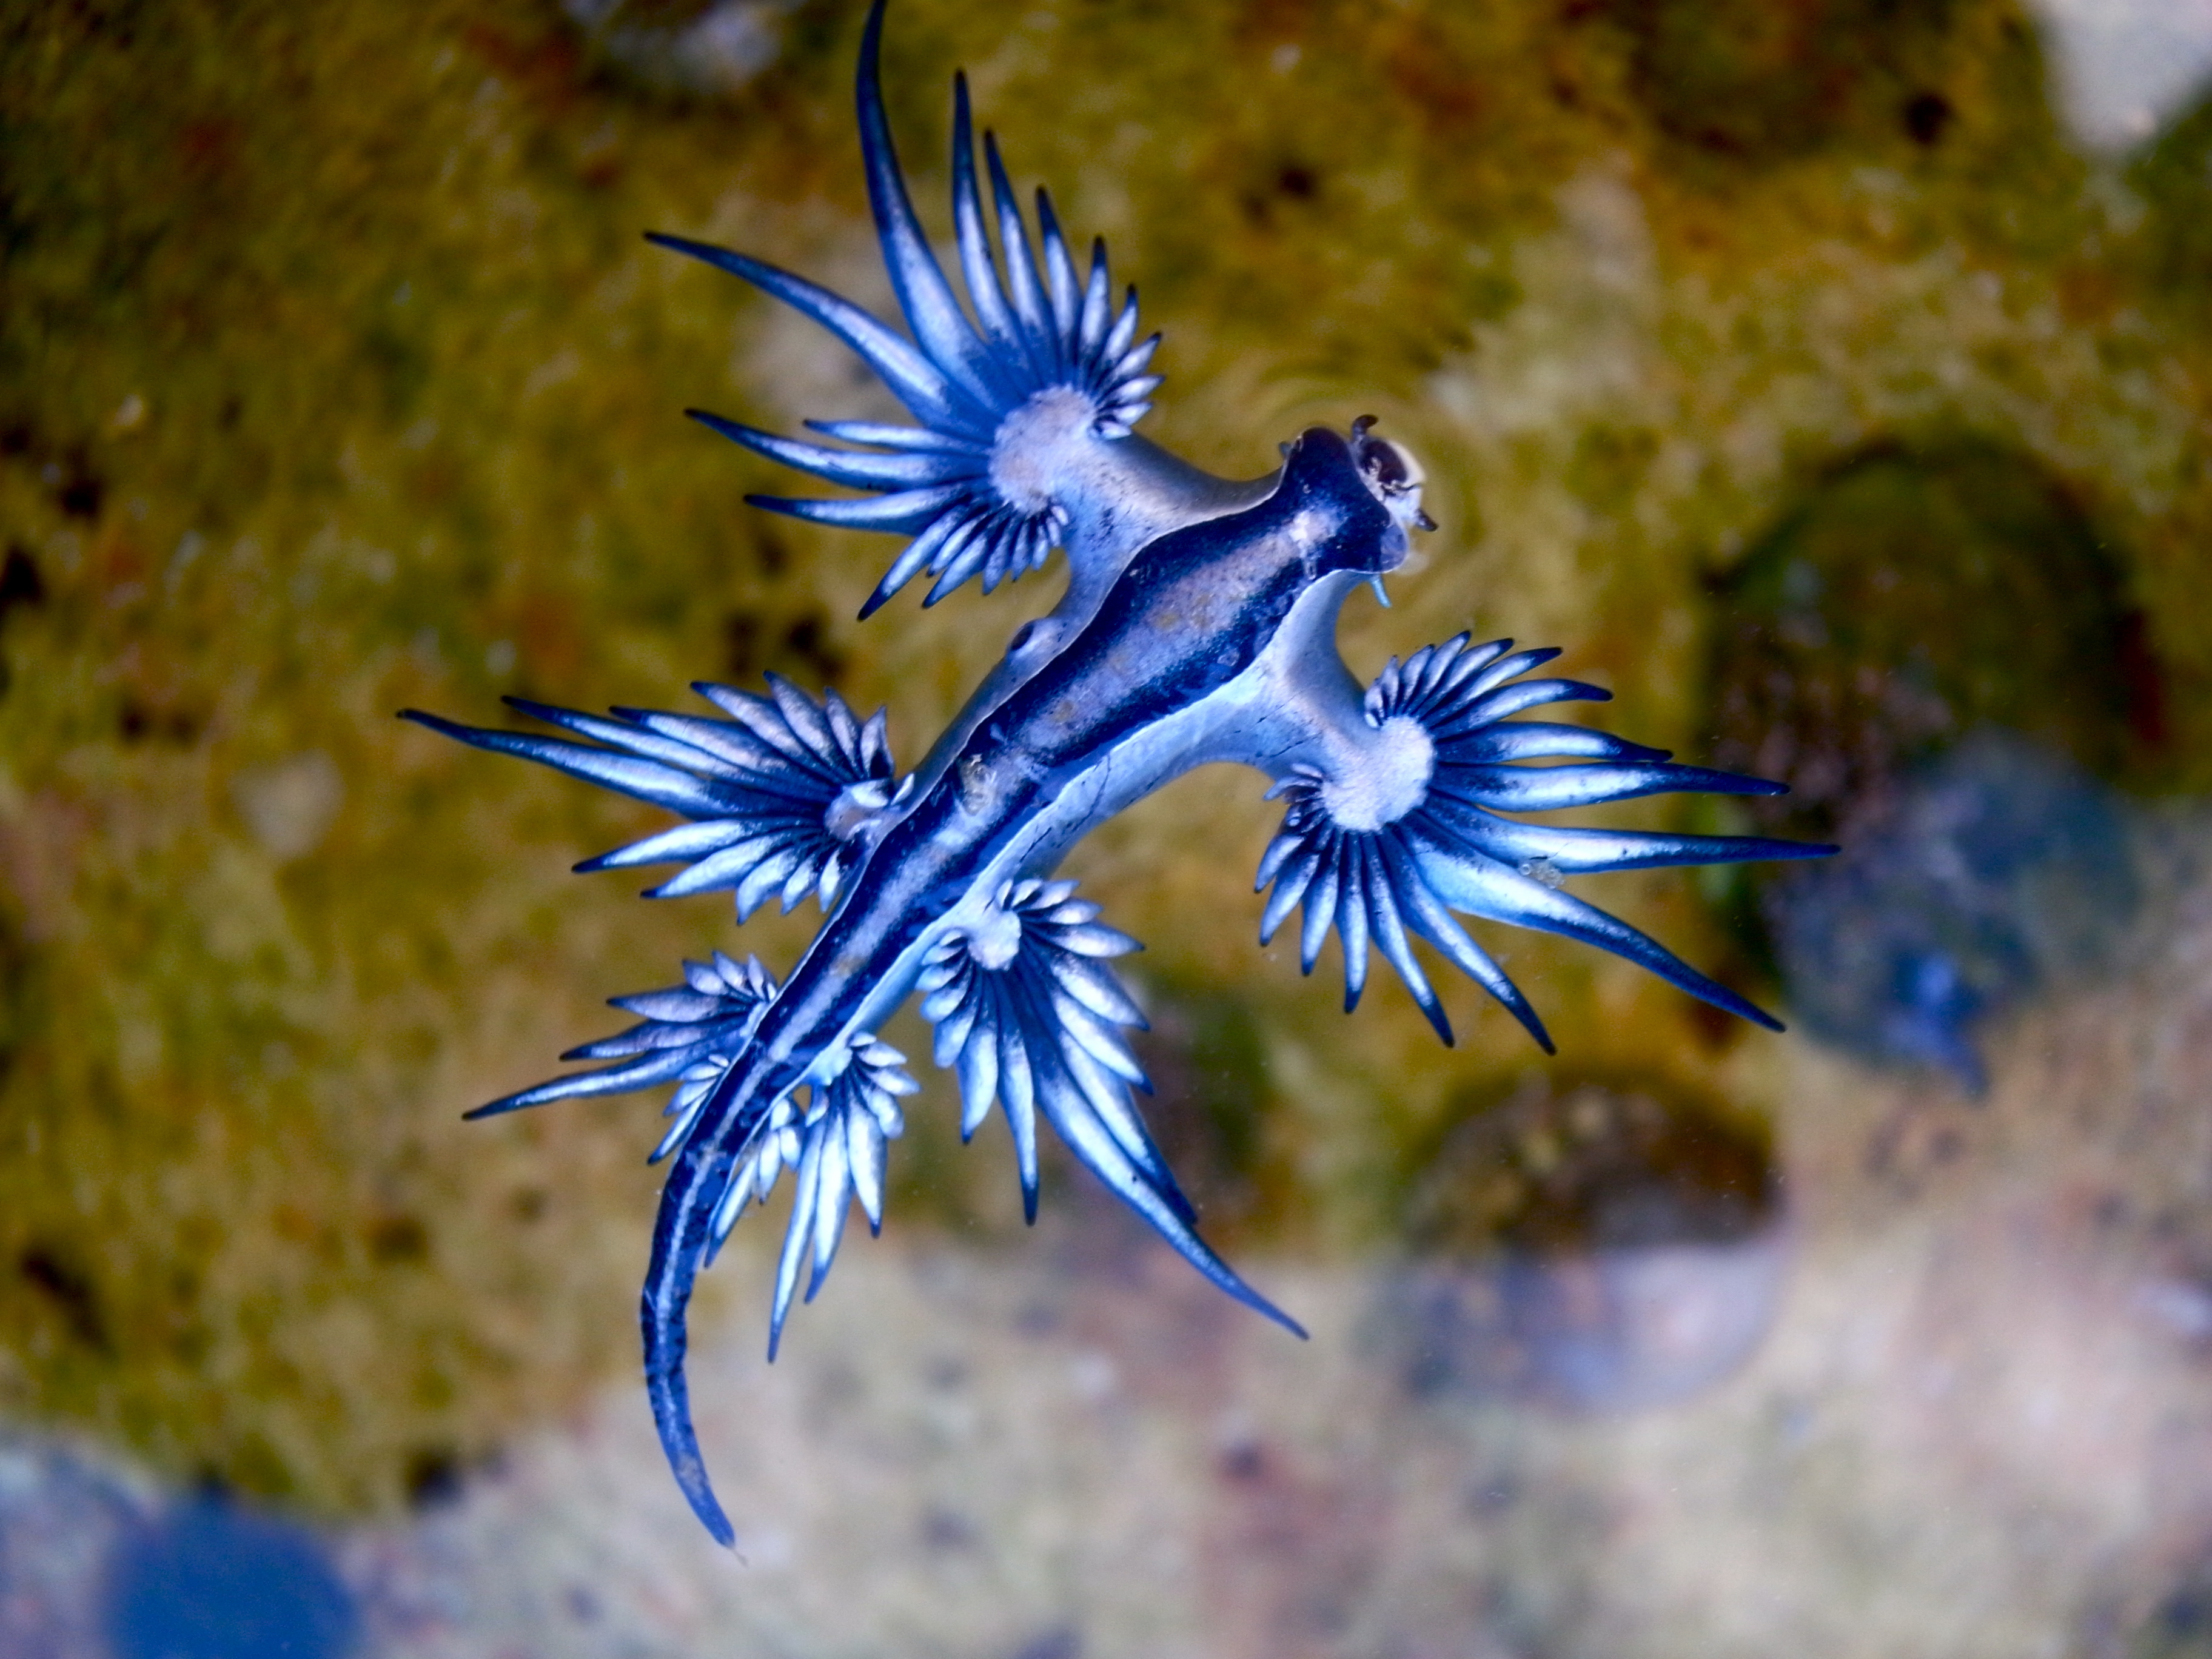 "Dangerous "Blue Dragon" slug found on Australian shores."